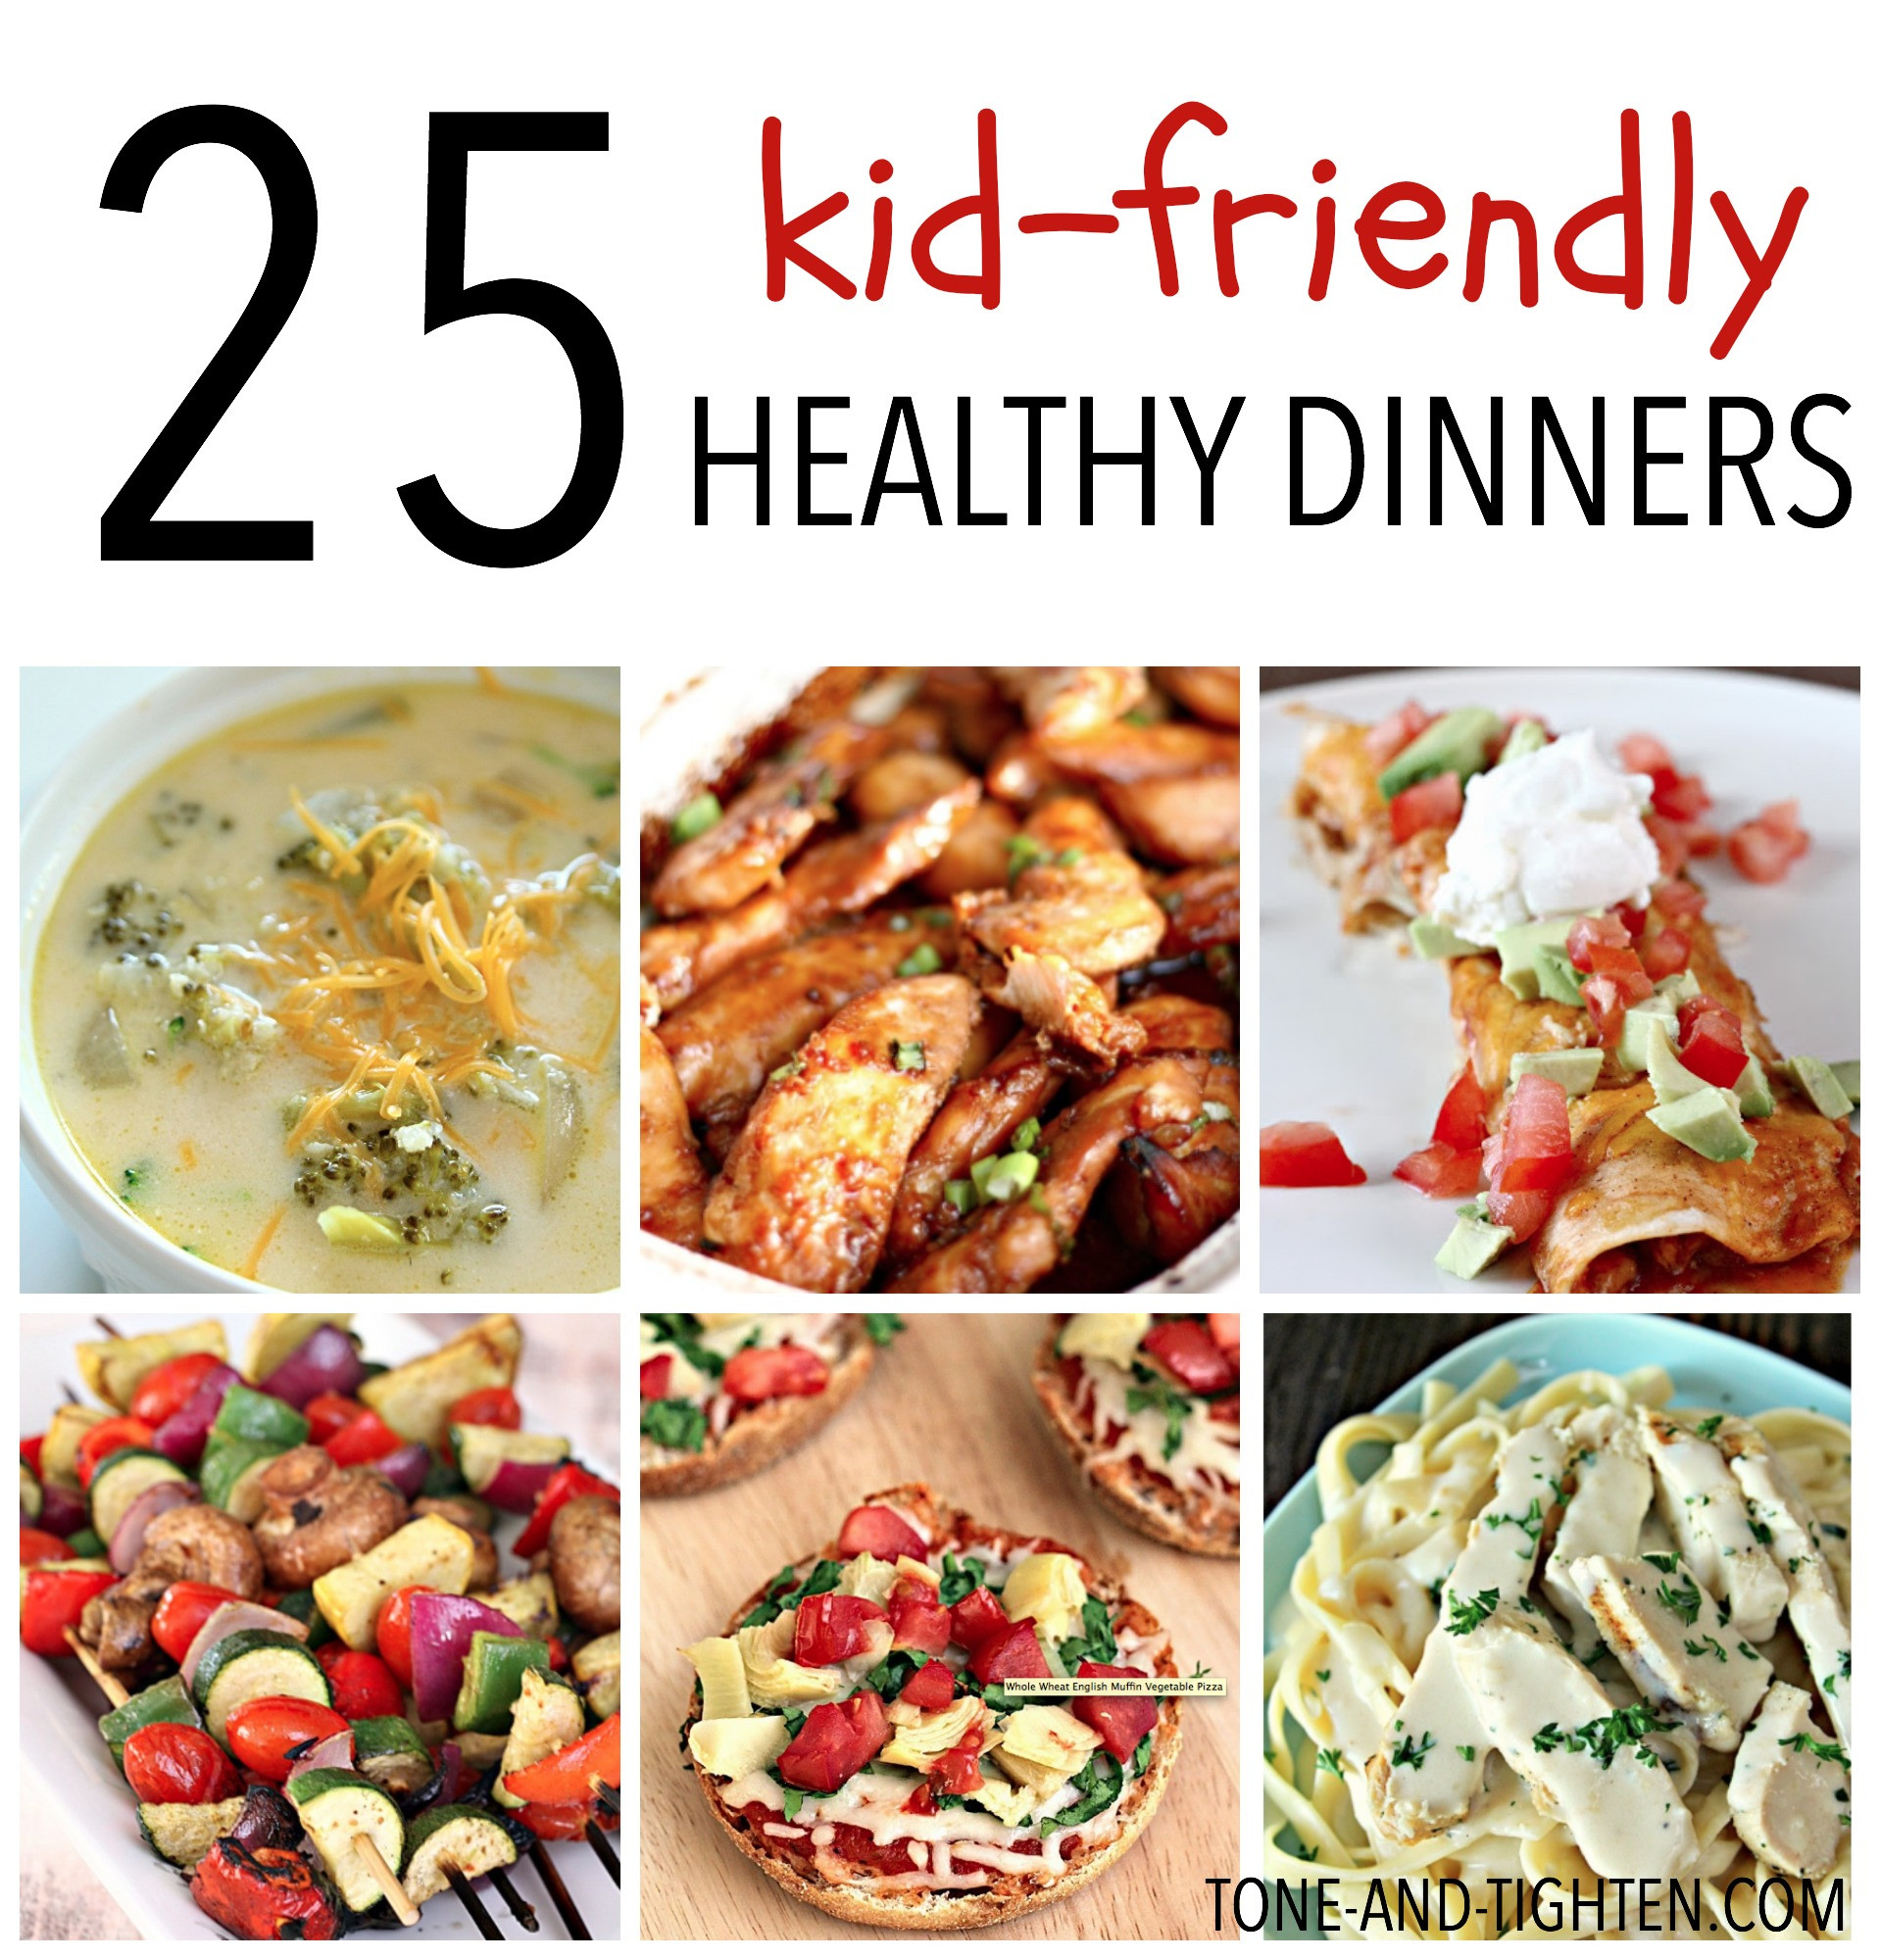 Easy Healthy Dinner Recipes Kid Friendly
 25 Kid Friendly Healthy Dinners